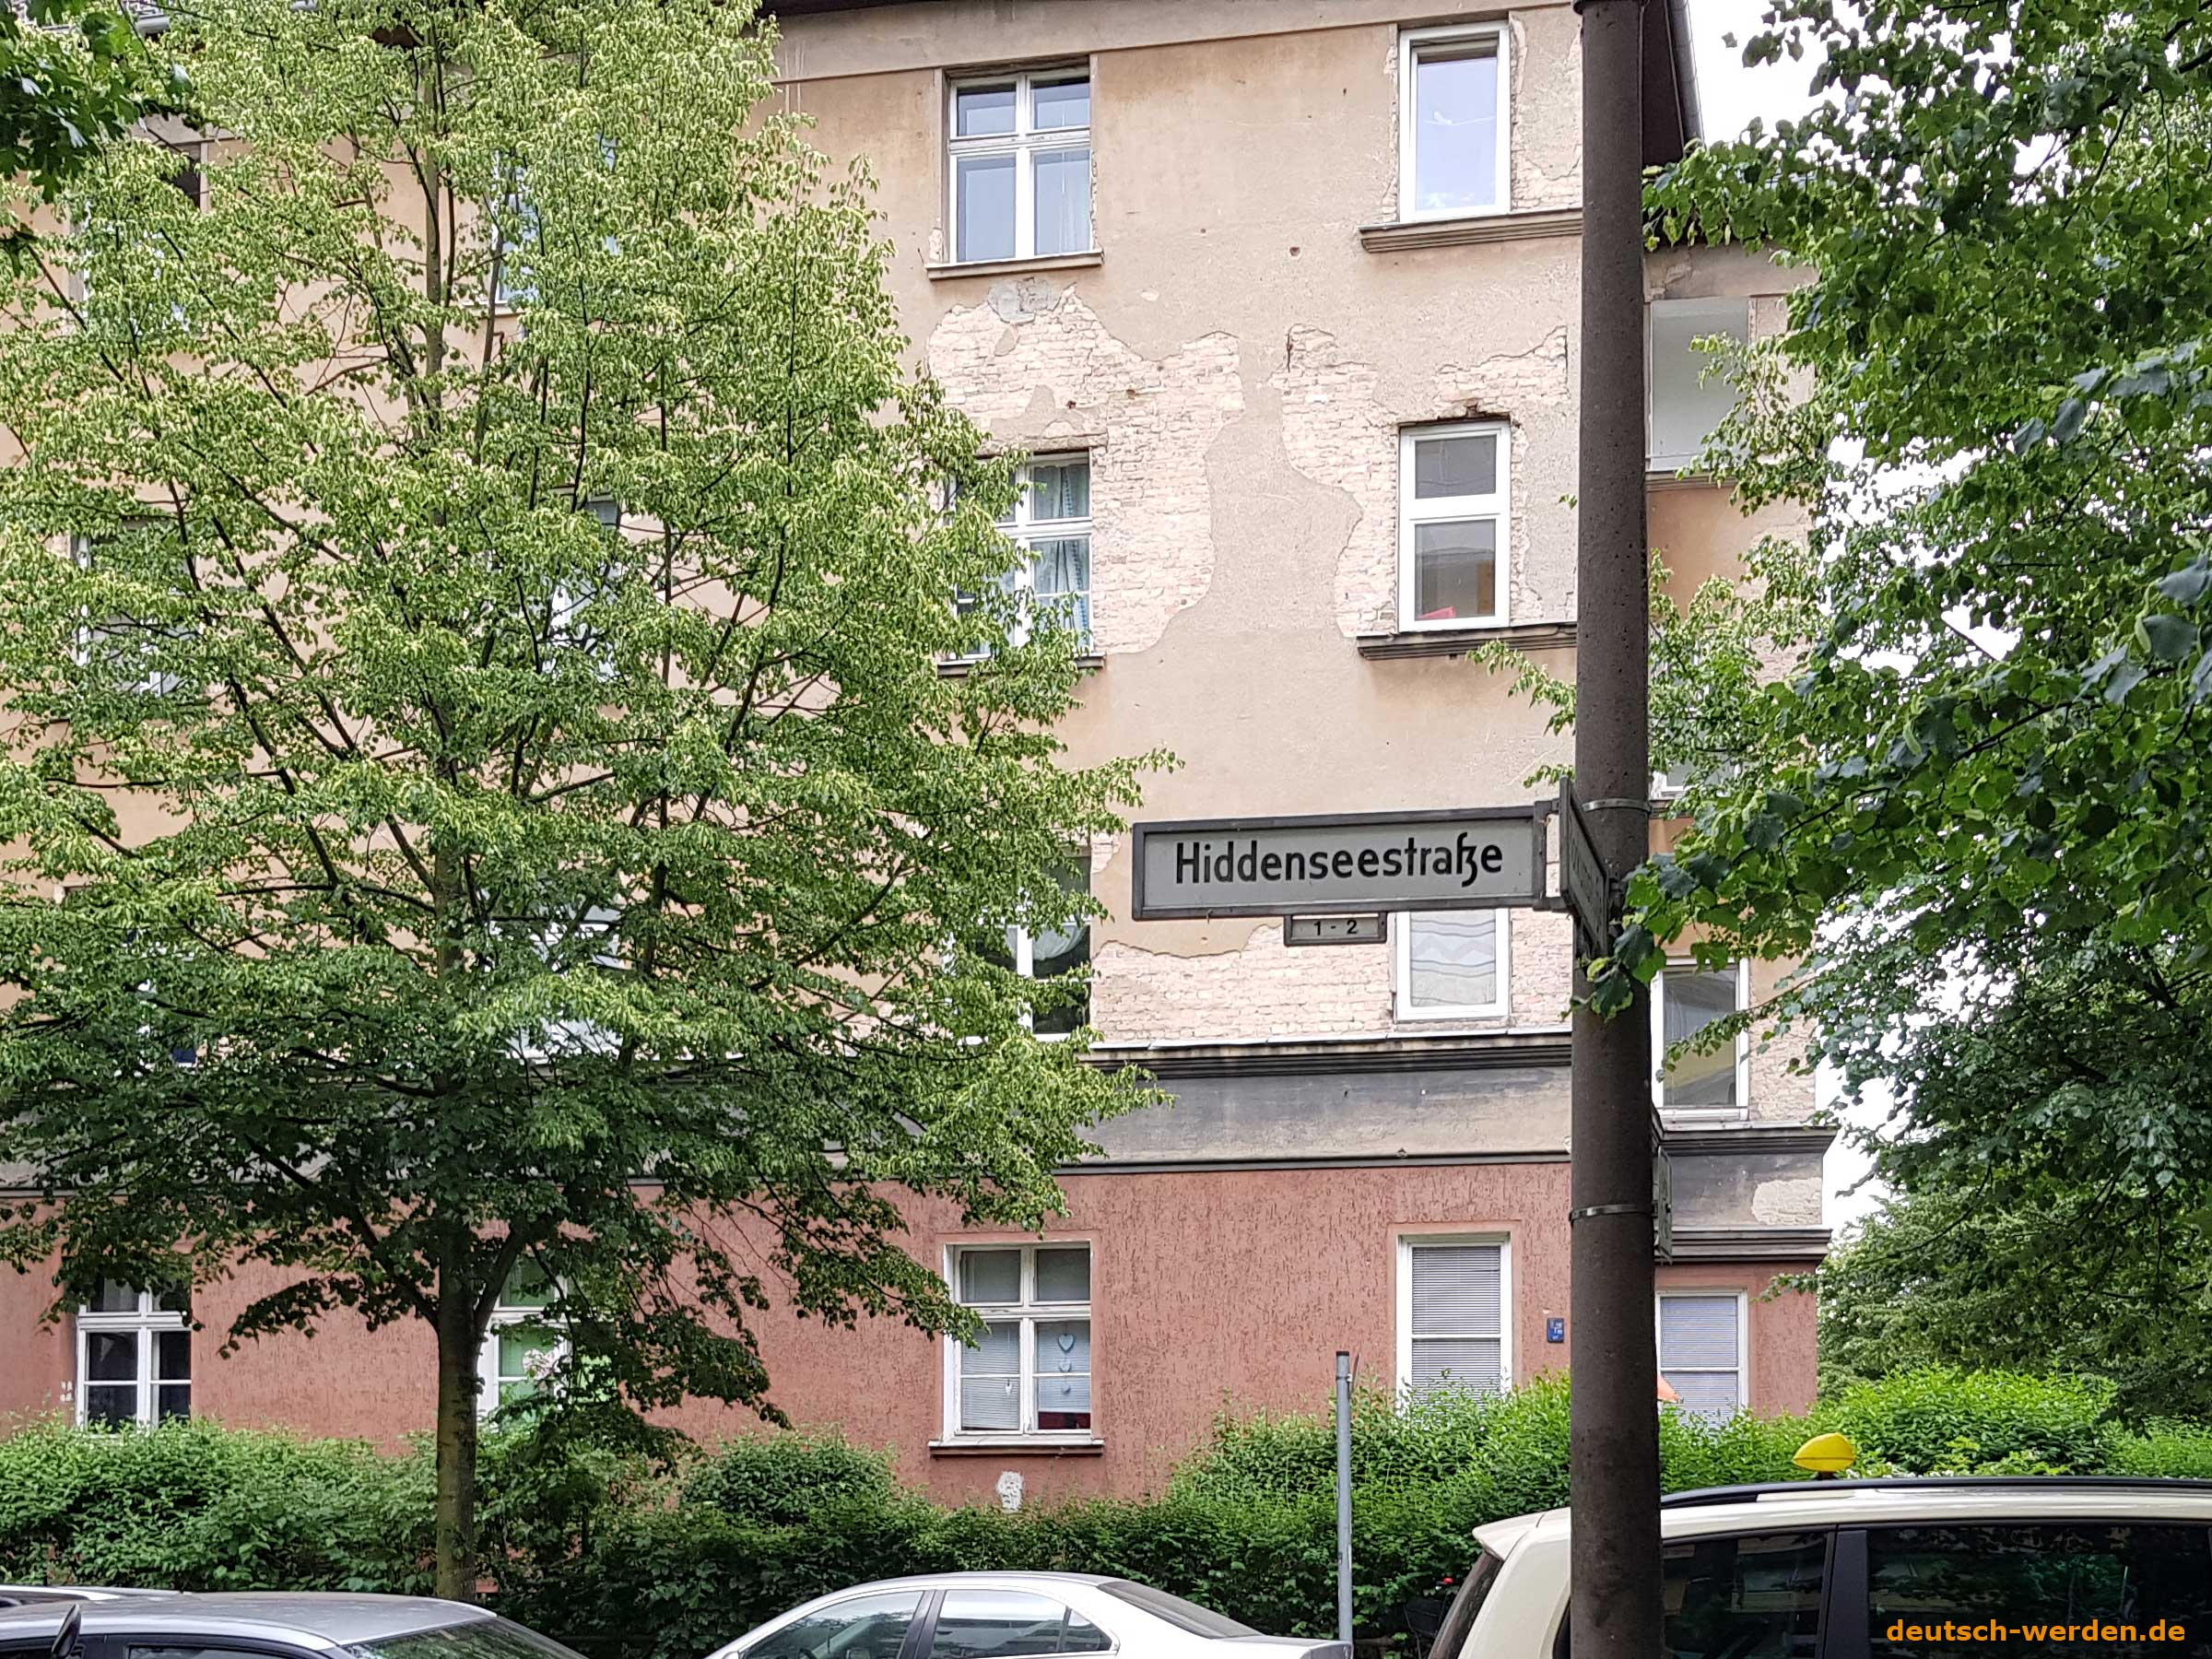 Hiddenseestraße